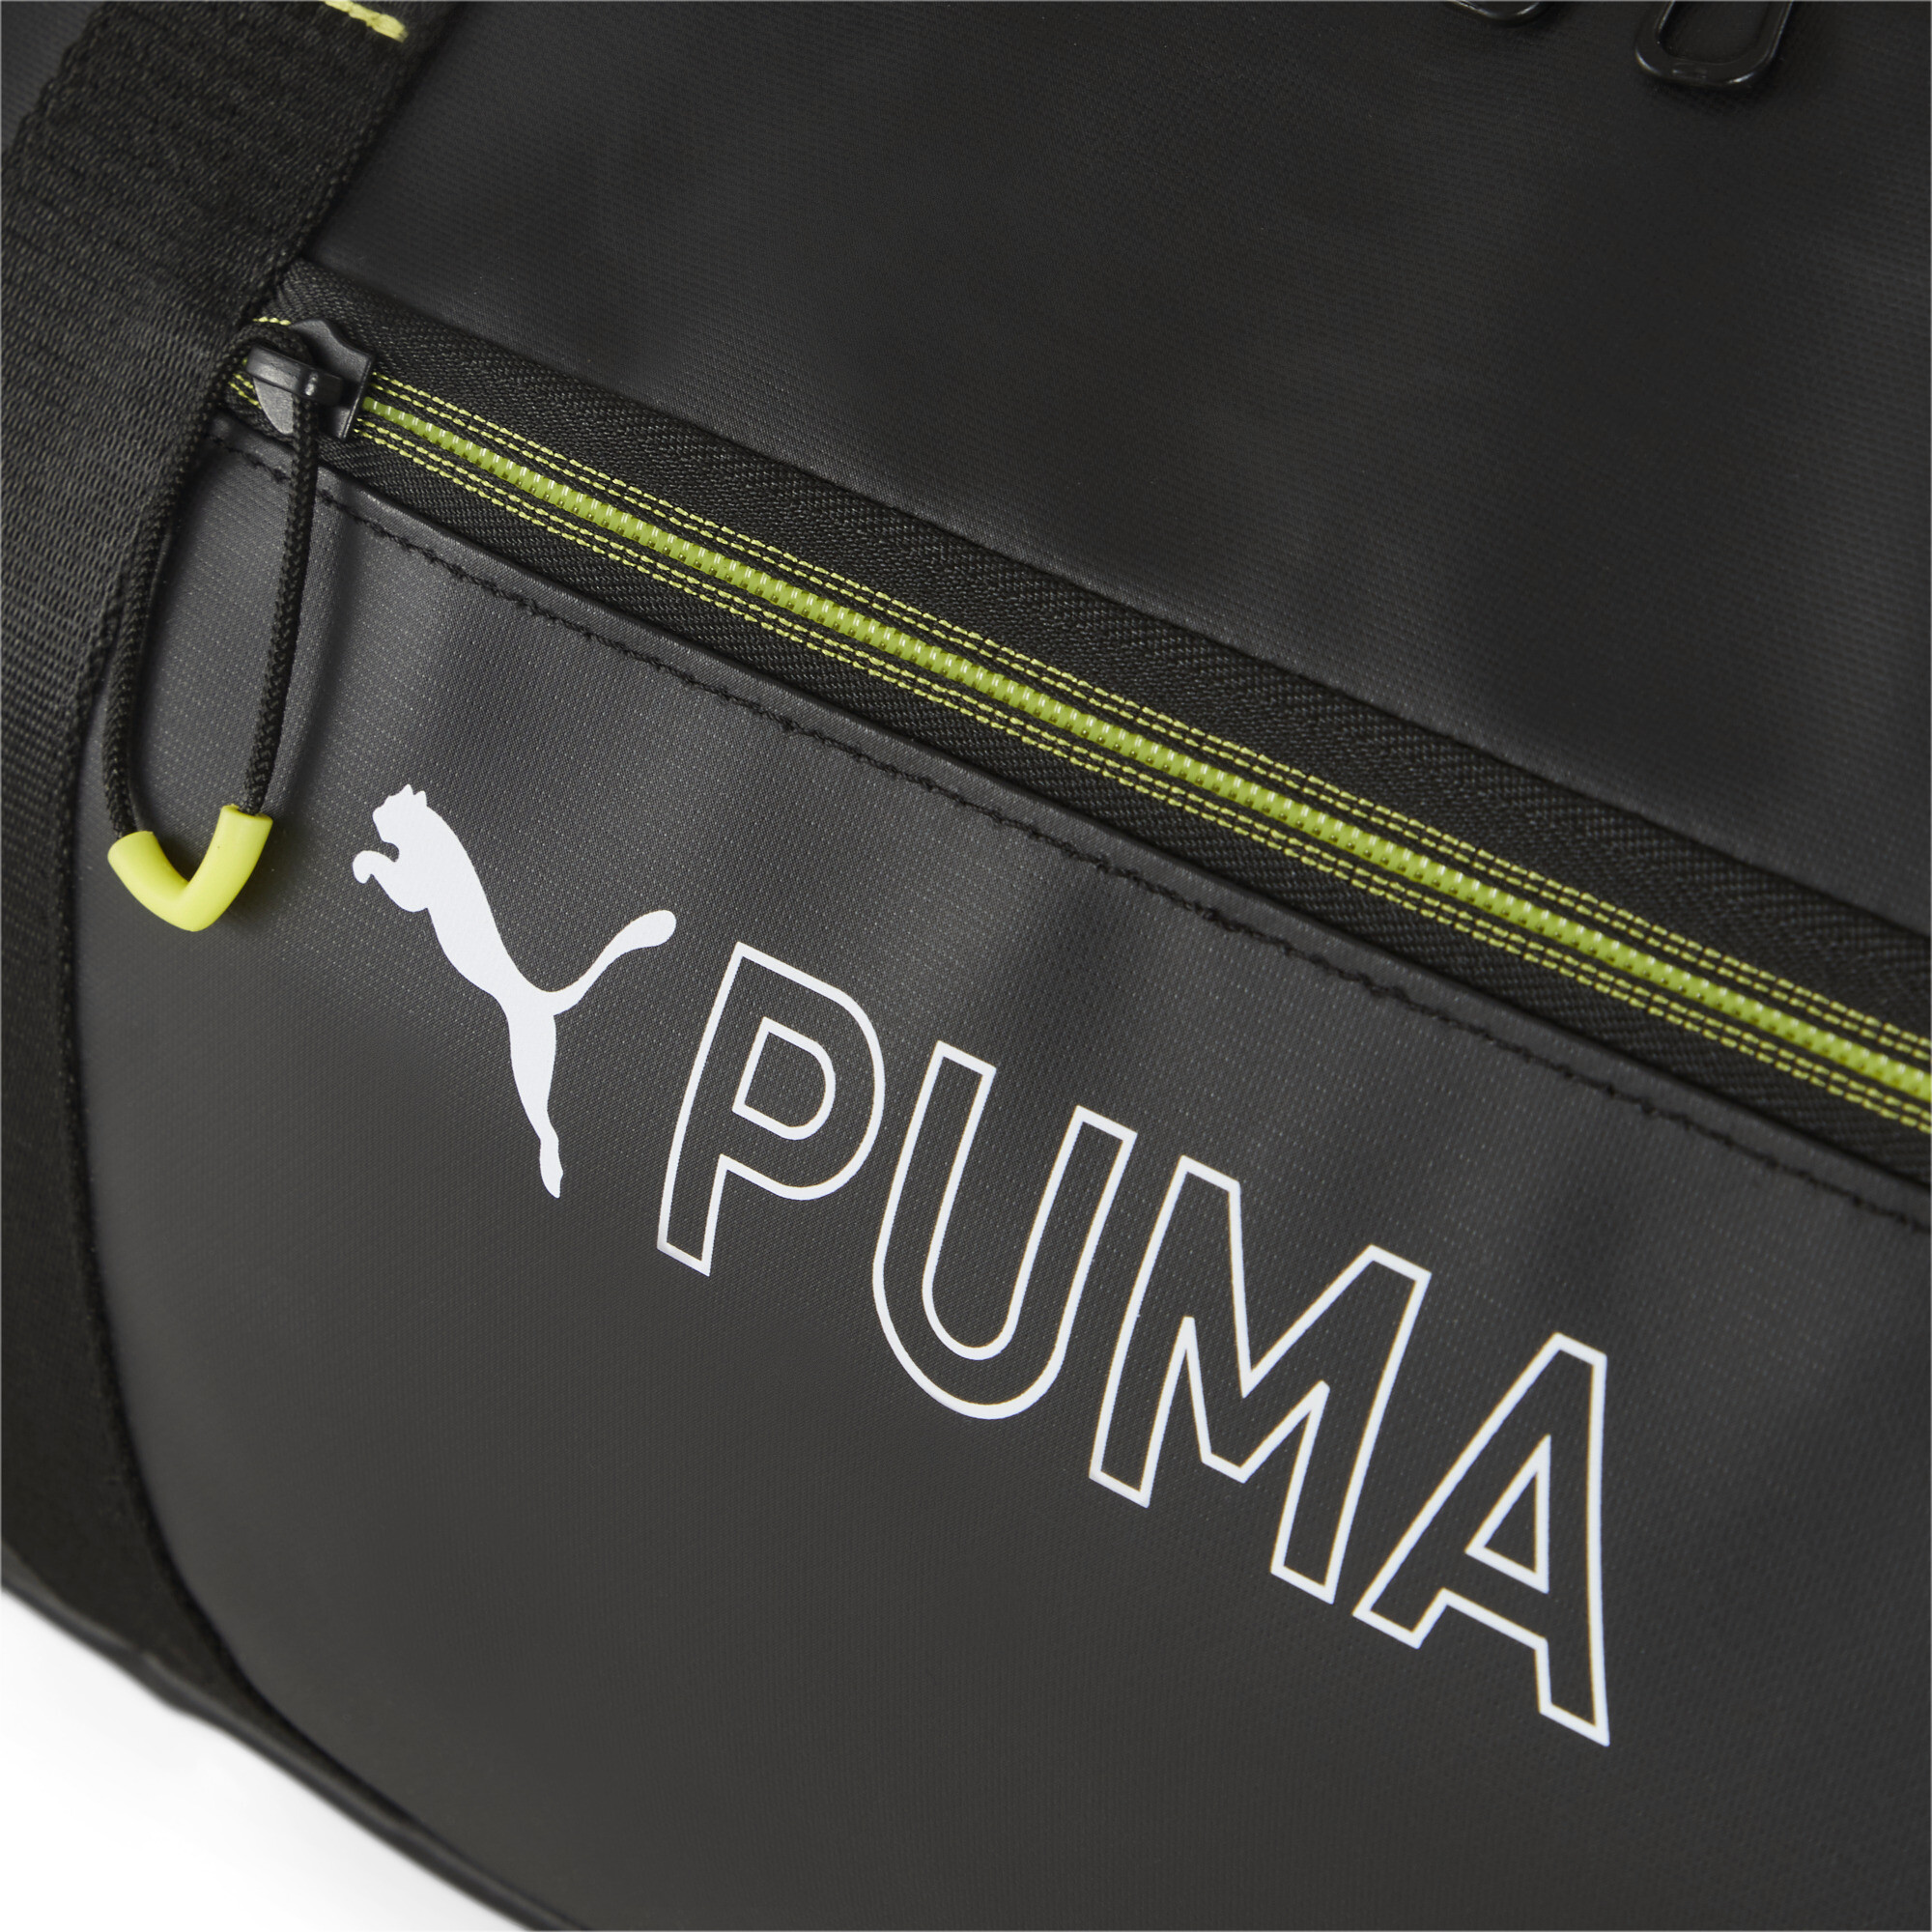 Men's PUMA Fit Duffel Bag In Black